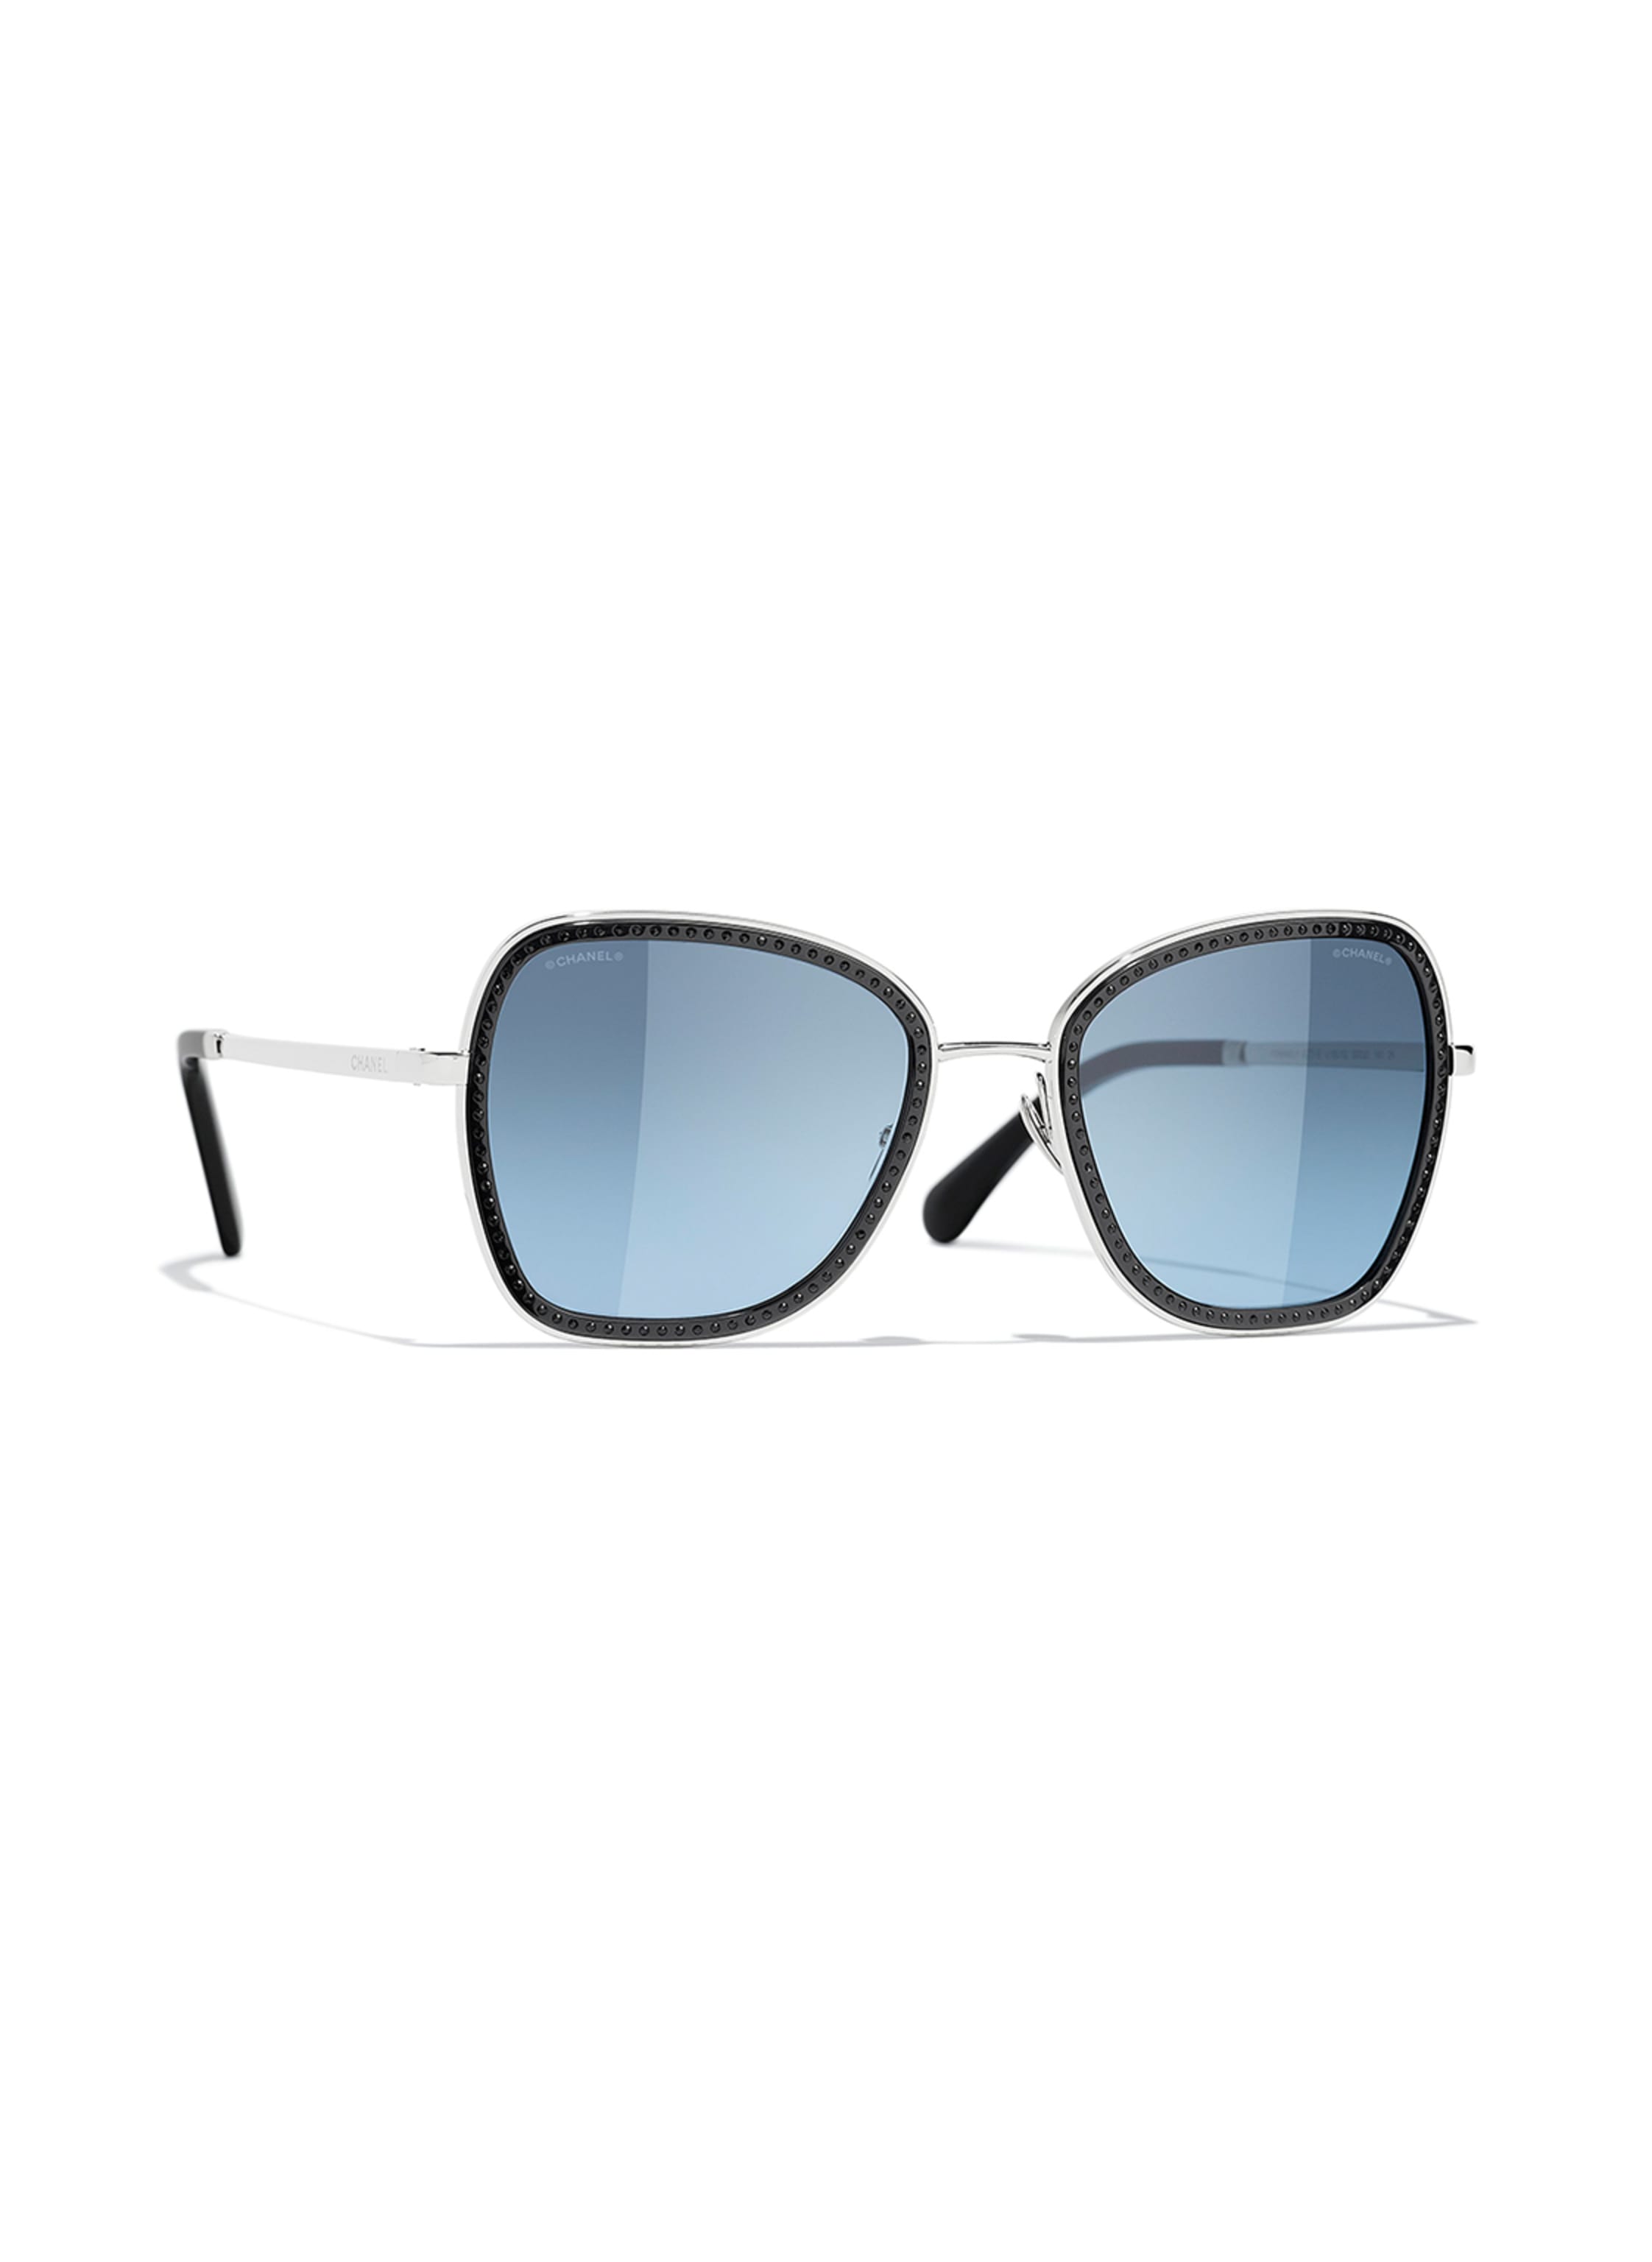 Chanel Rectangle Sunglasses CH5465Q 55 Blue  Dark Blue Sunglasses   Sunglass Hut New Zealand